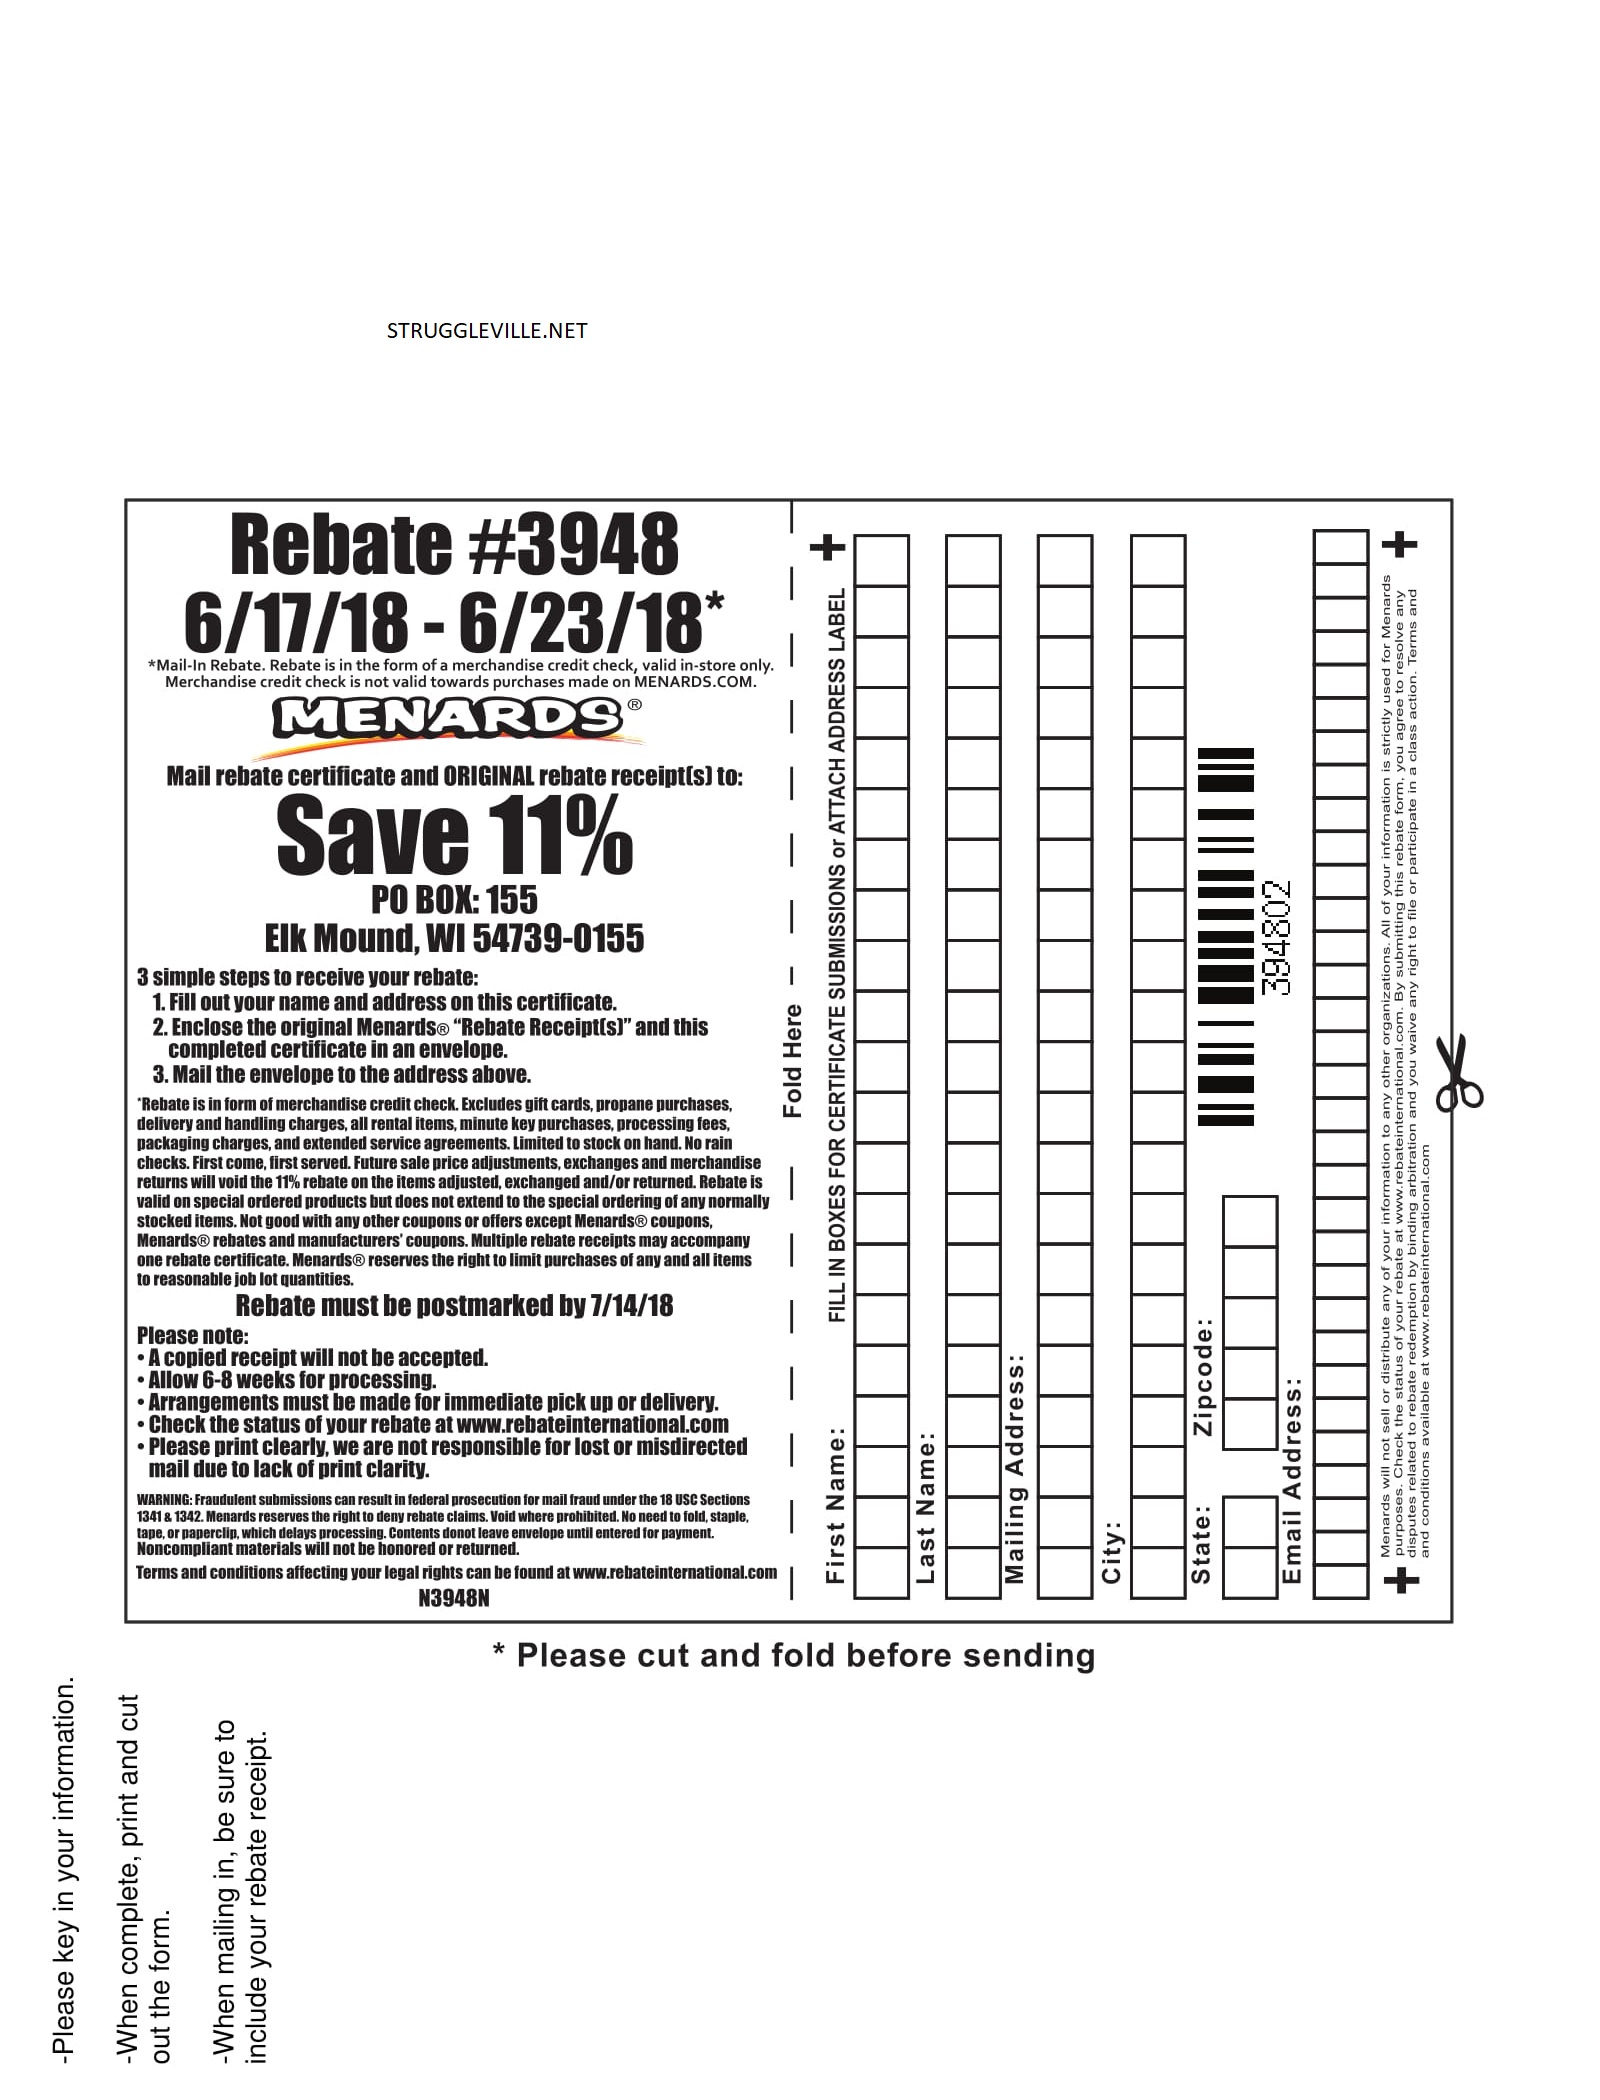 menards-11-price-adjustment-rebate-8502-purchases-9-29-19-10-12-19